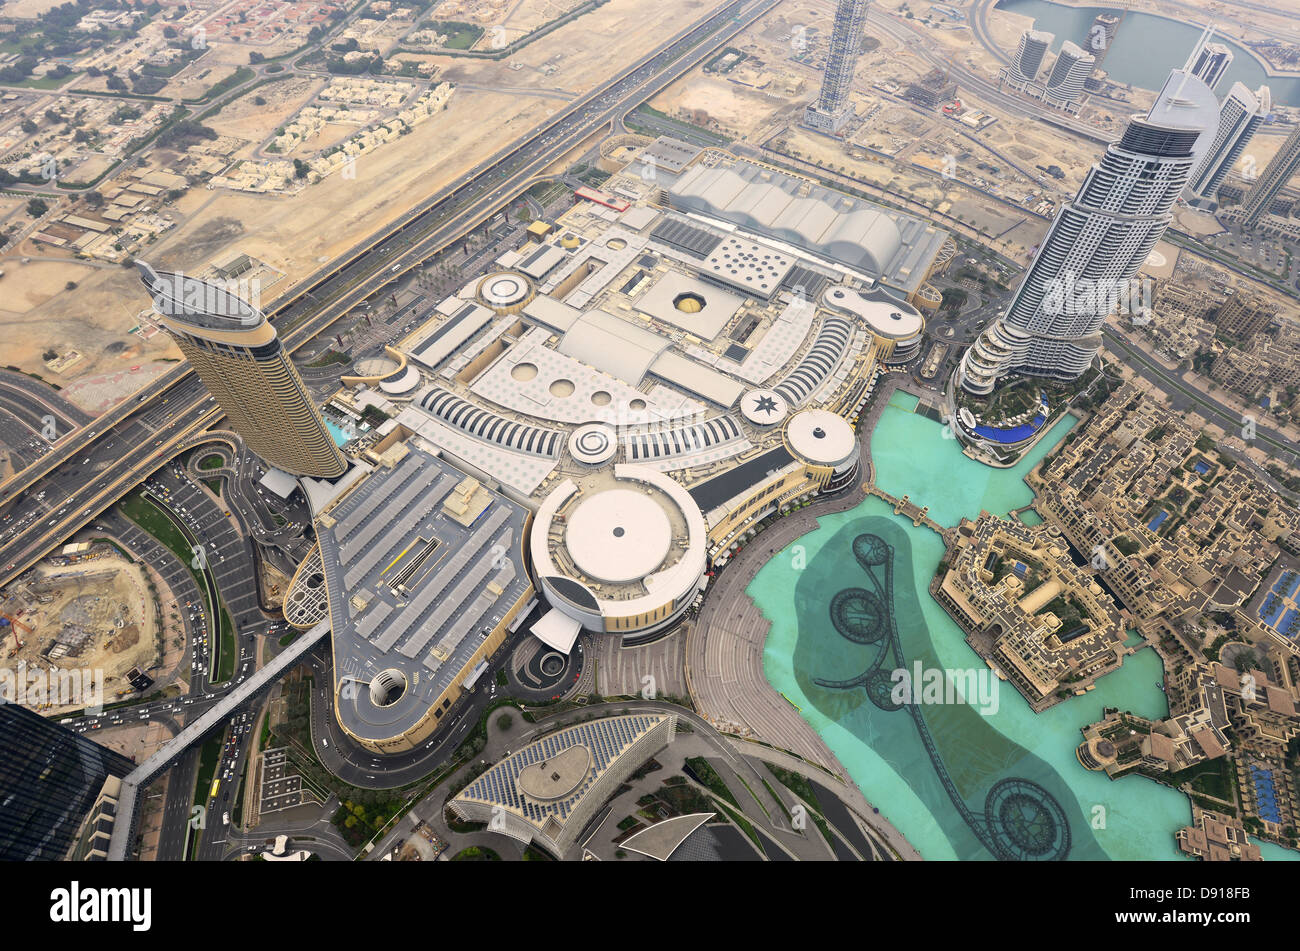 Dubai Mall, aerial view of the Dubai Mall, world's largest mall, Dubai, United Arab Emirates Stock Photo